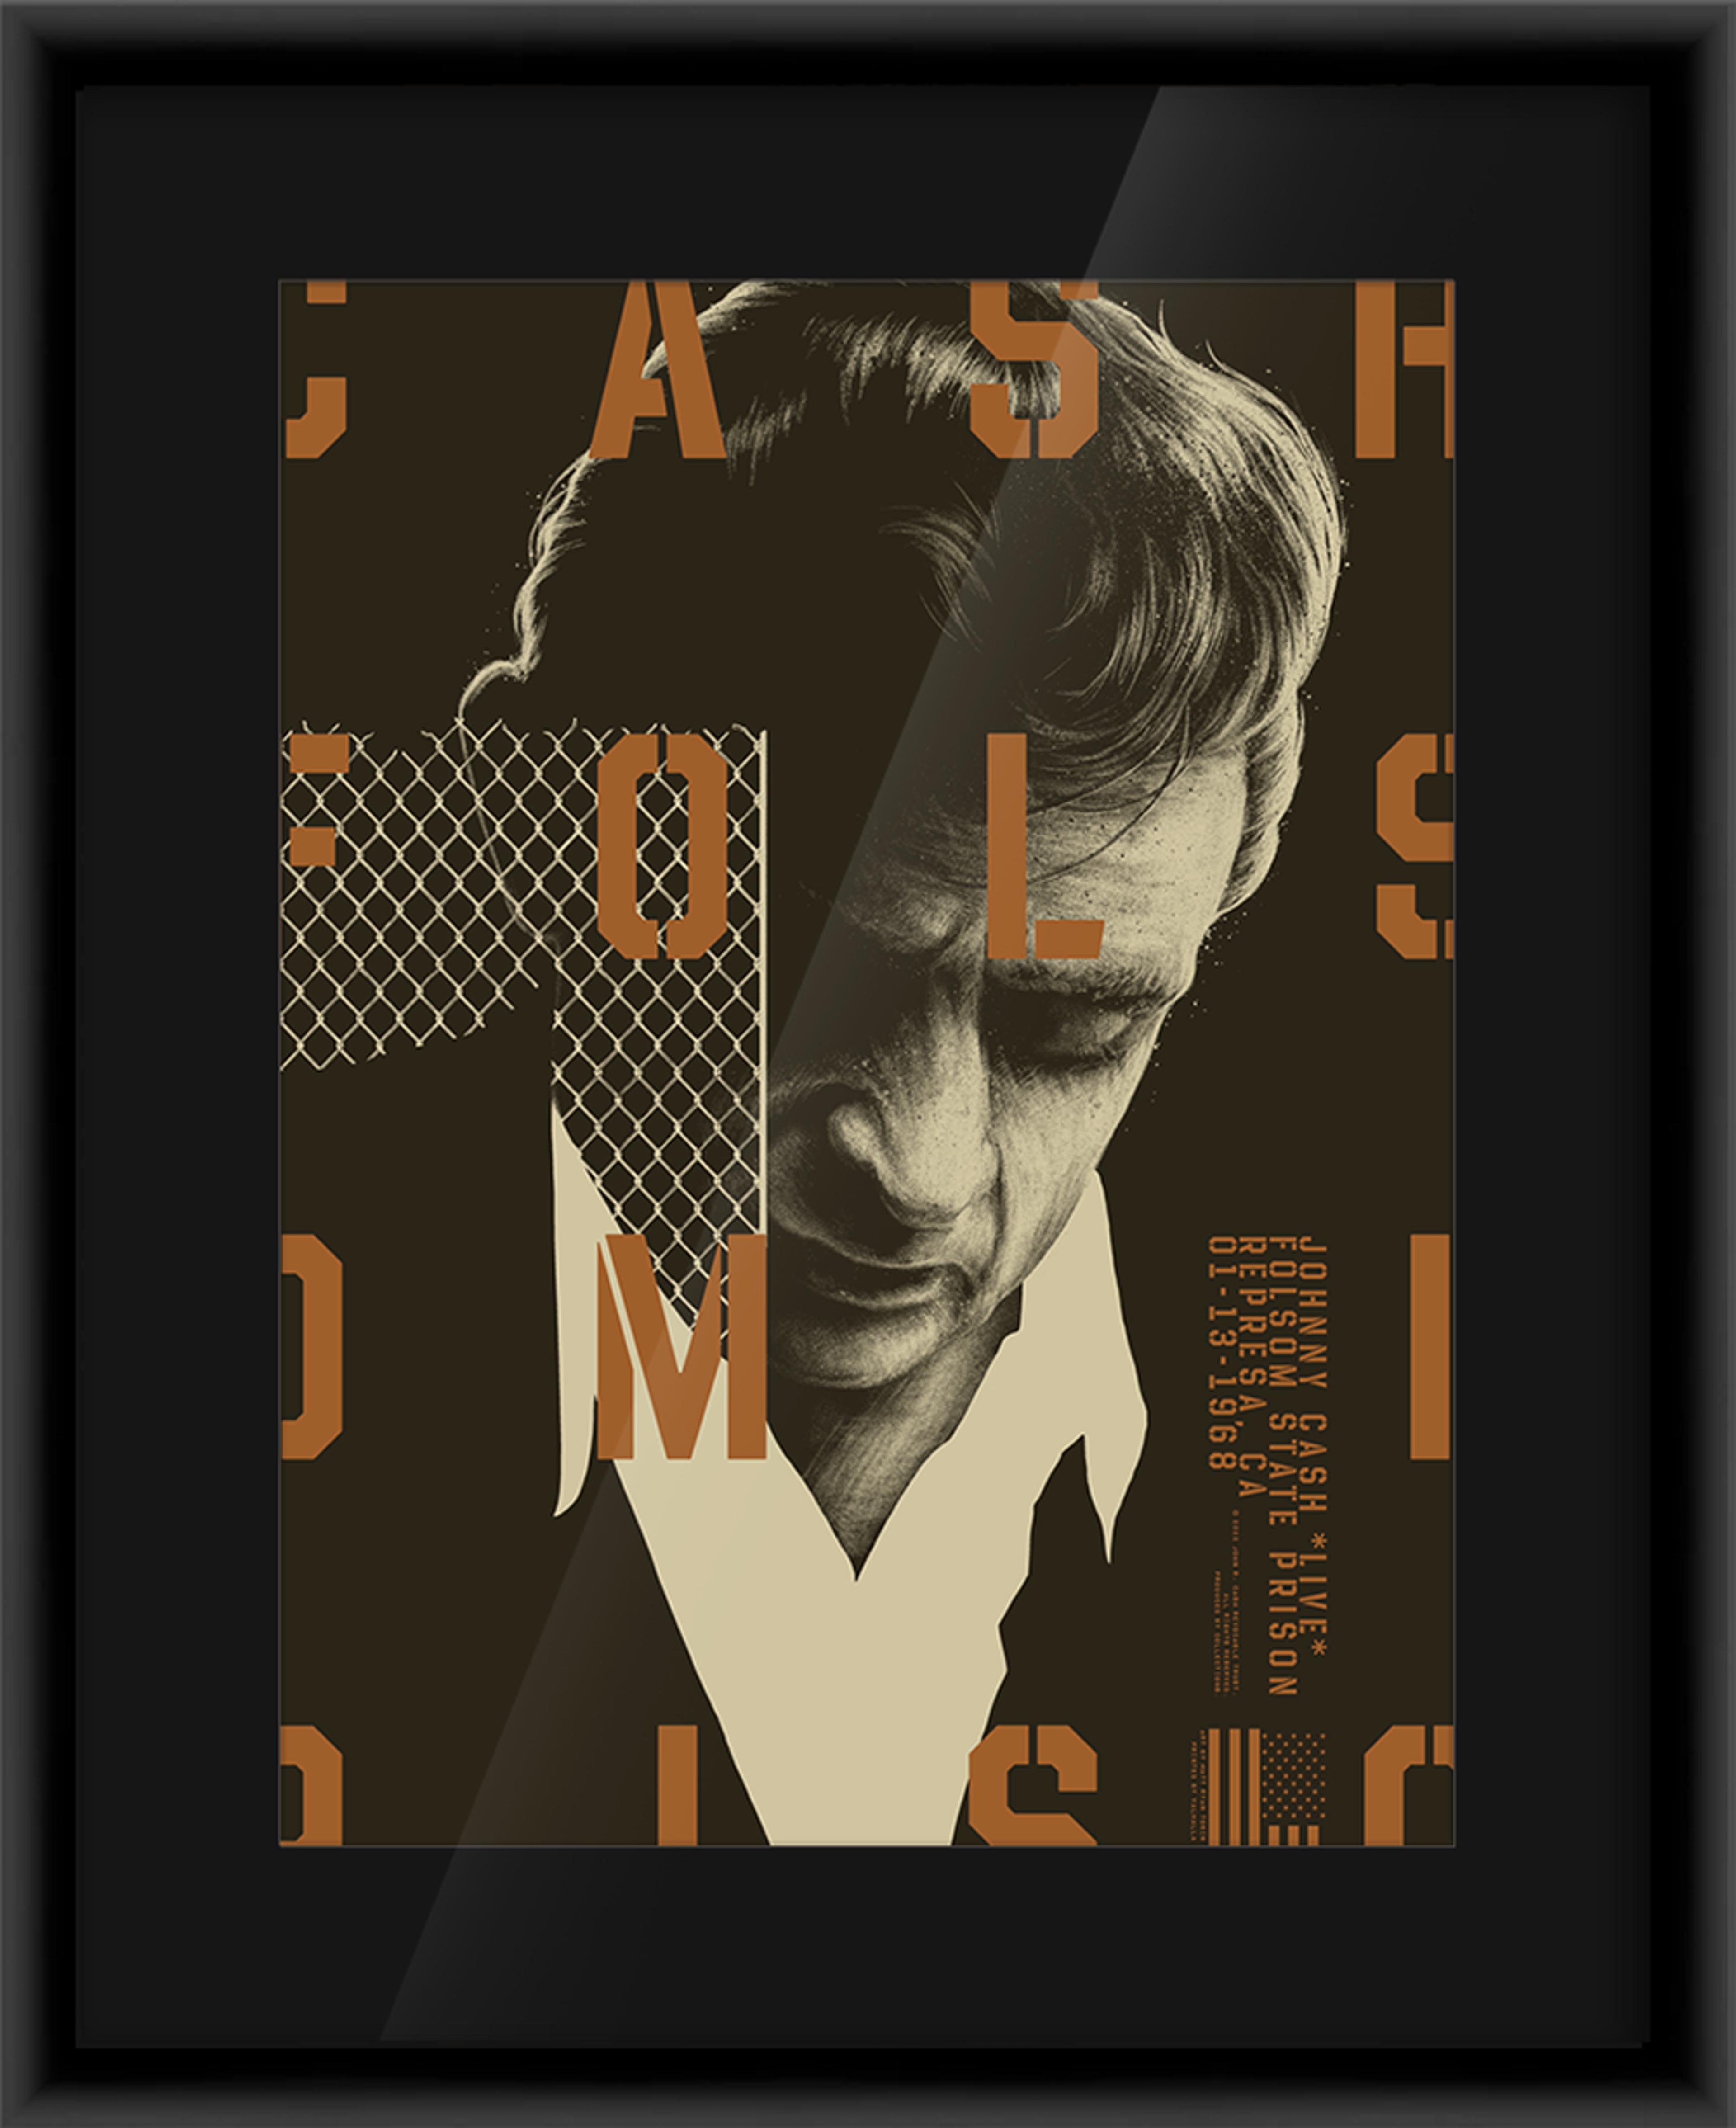 Alternate View 1 of Johnny Cash Folsom Prison (Copper Variant)